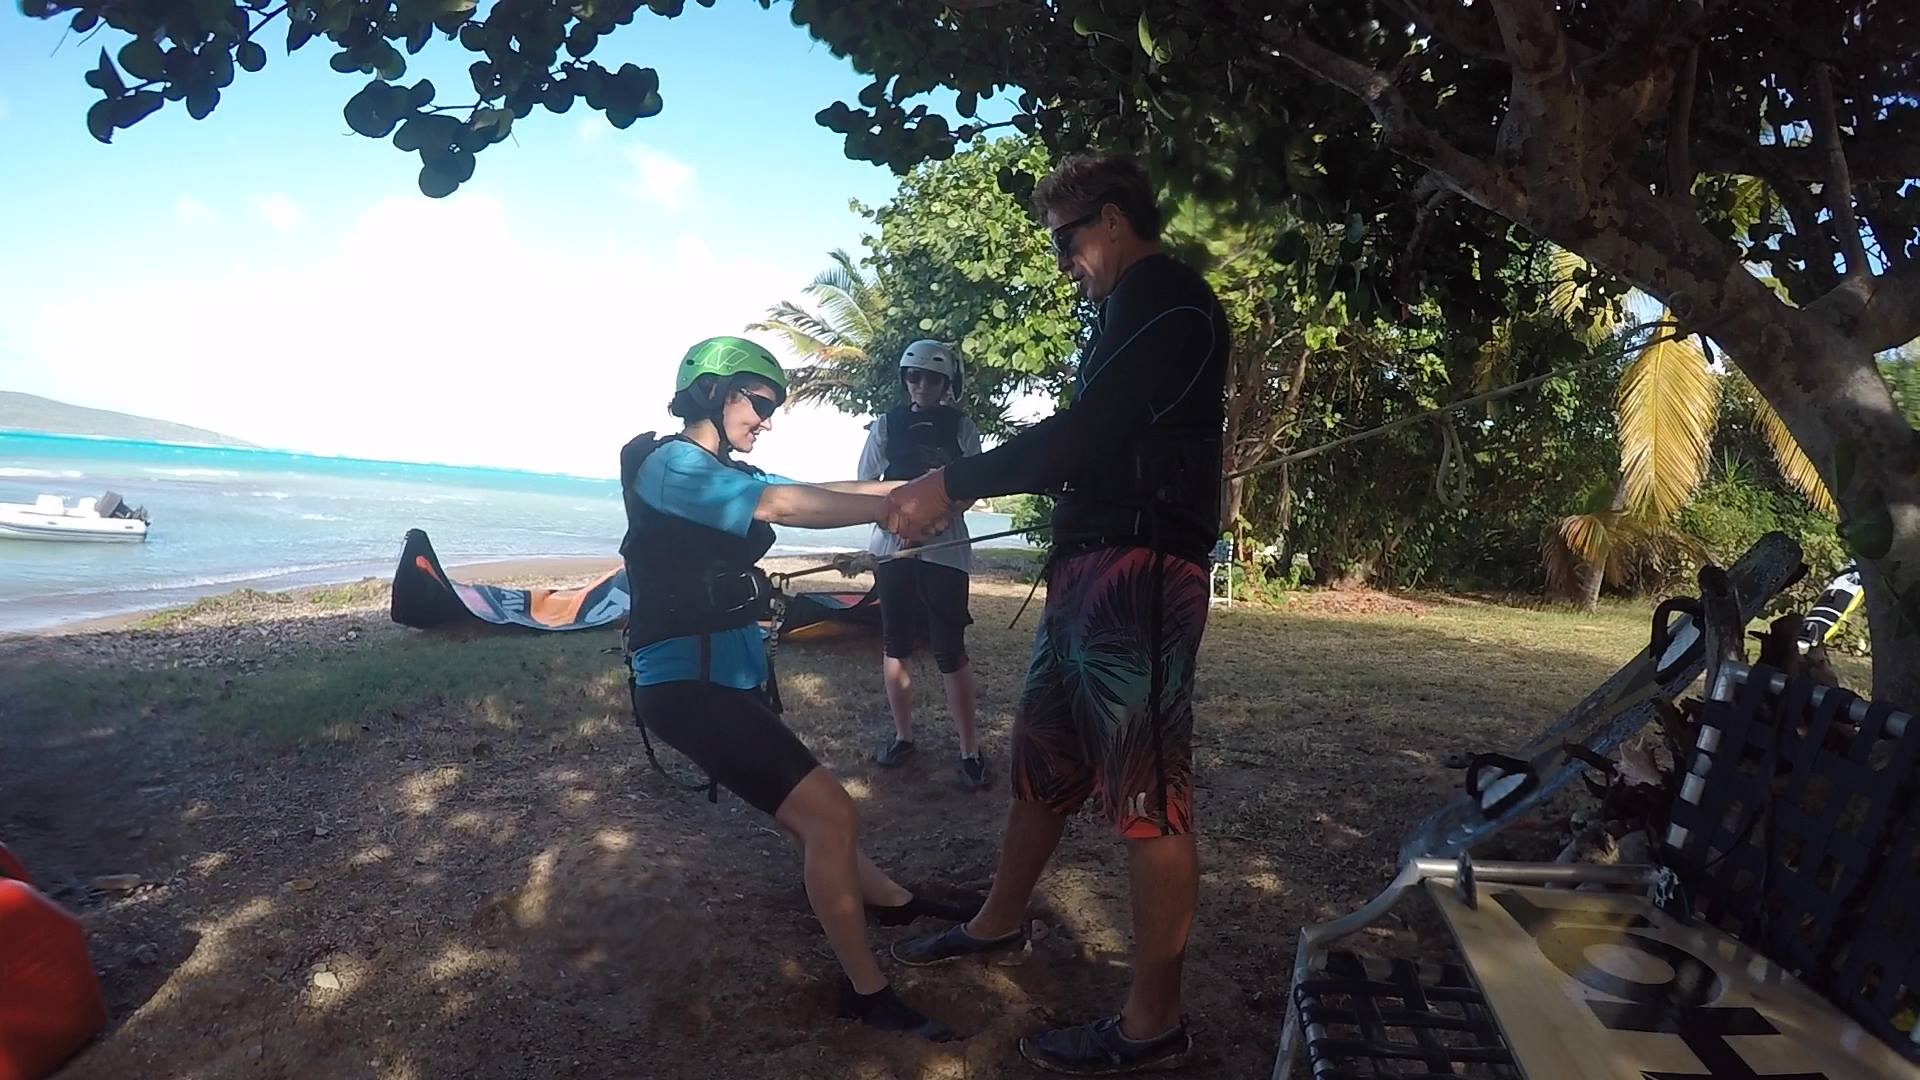 Bill Kraft teaching a student how to kiteboard in the US Virgin Islands